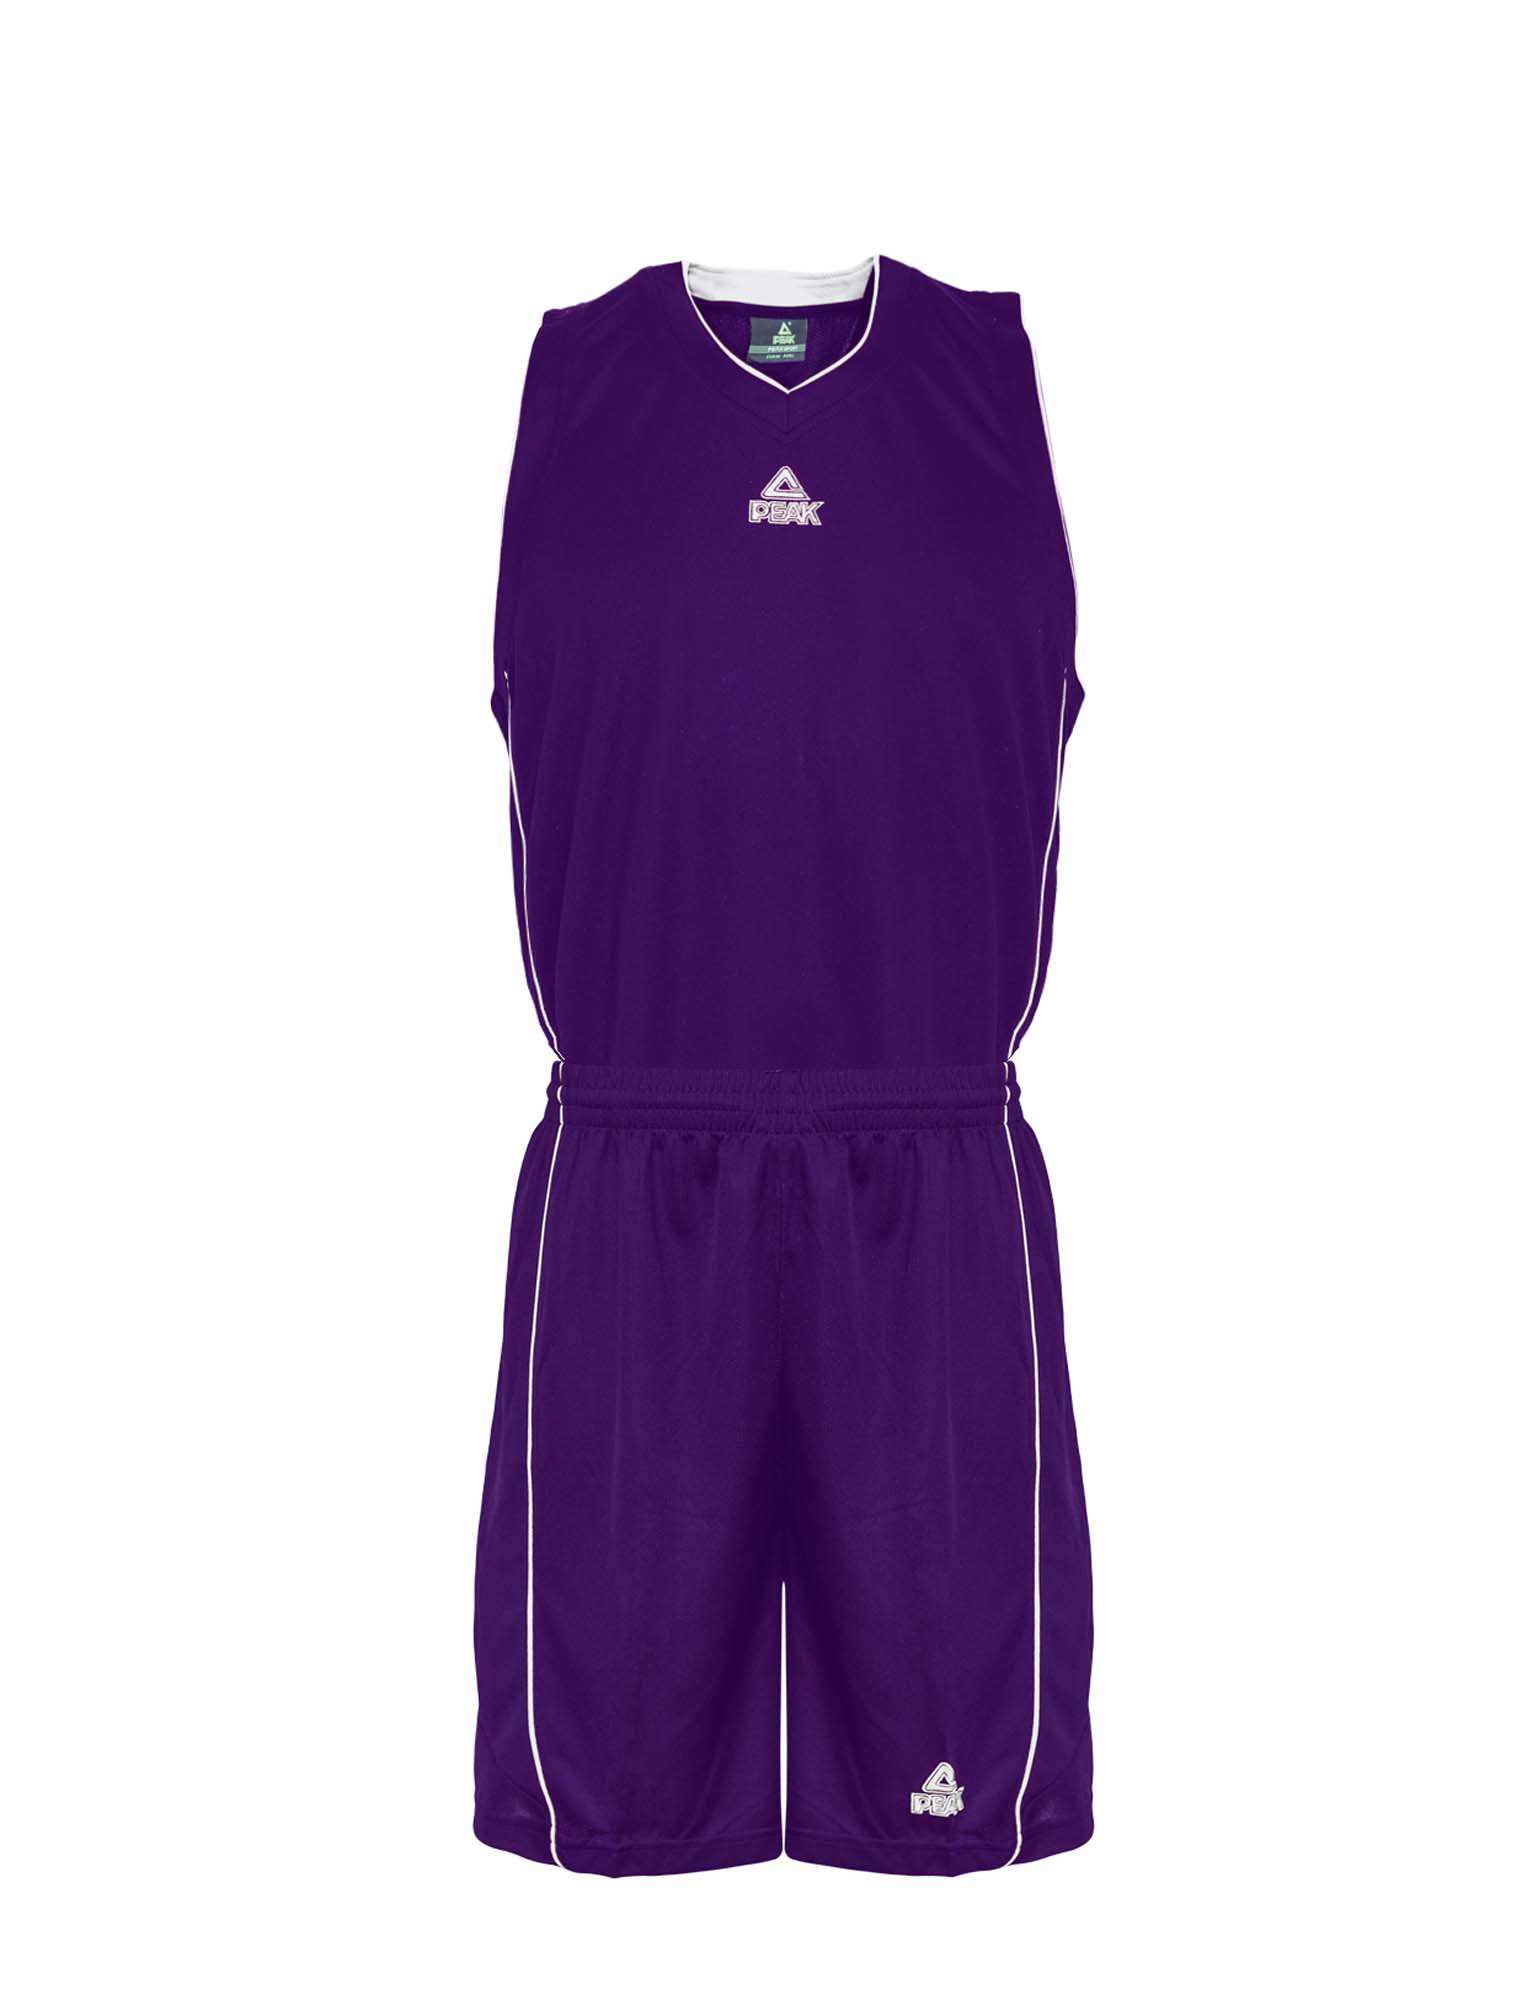 Peak Herren Basketball Set Trikot/Short Shirt Pants Fitness Set grün/weiß Gr S,L 